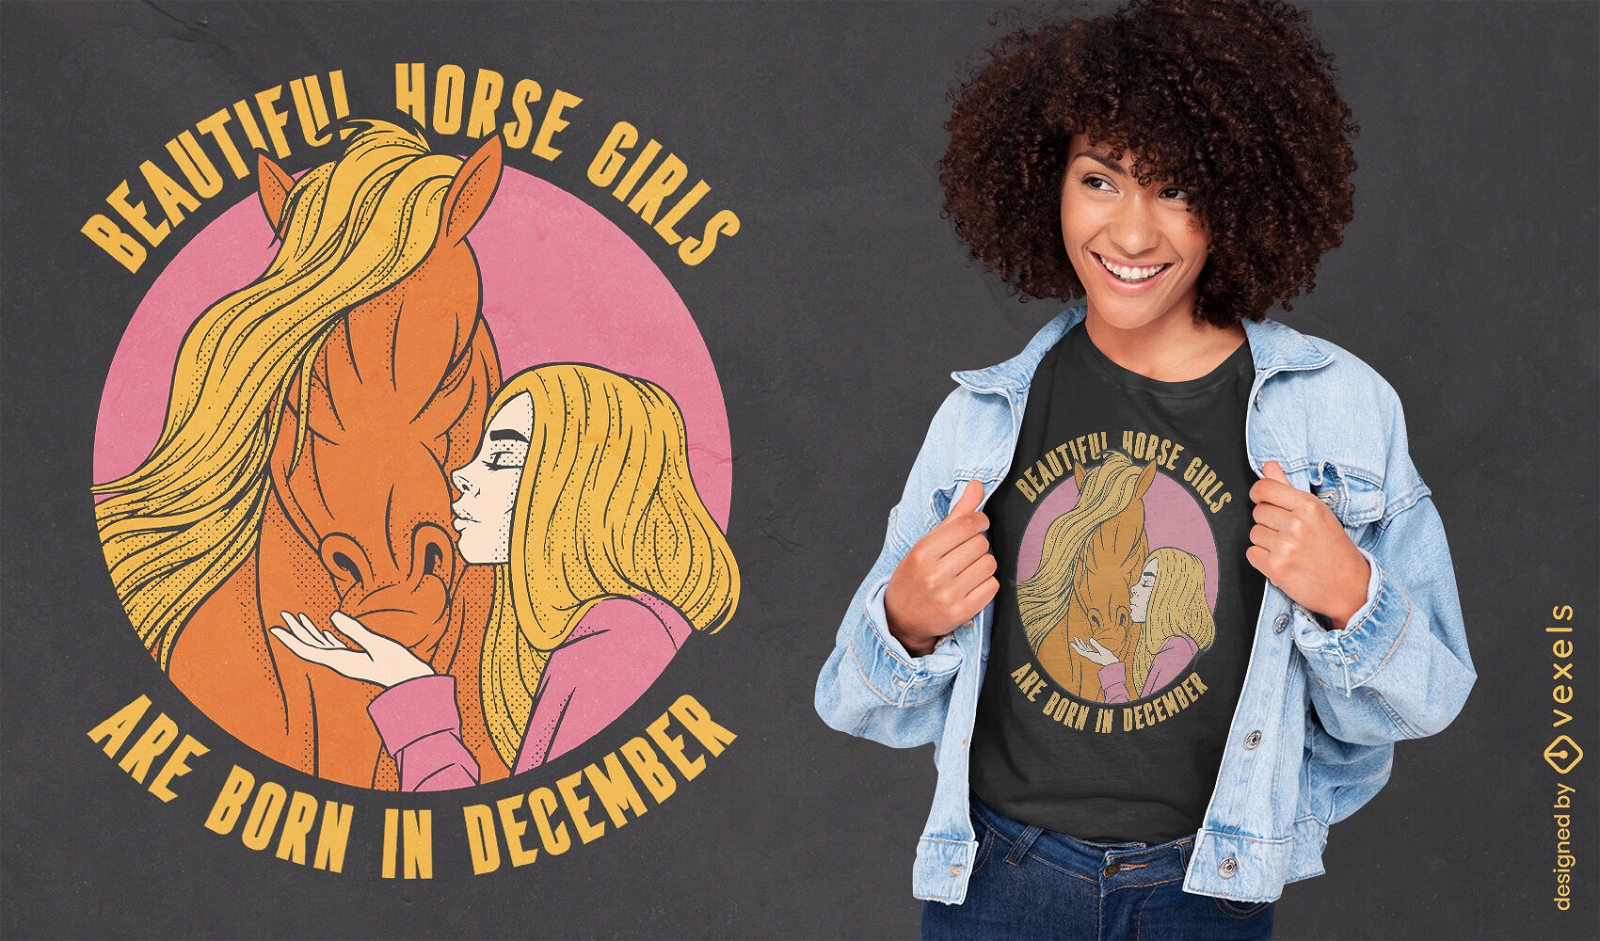 Horse animal and girl t-shirt design